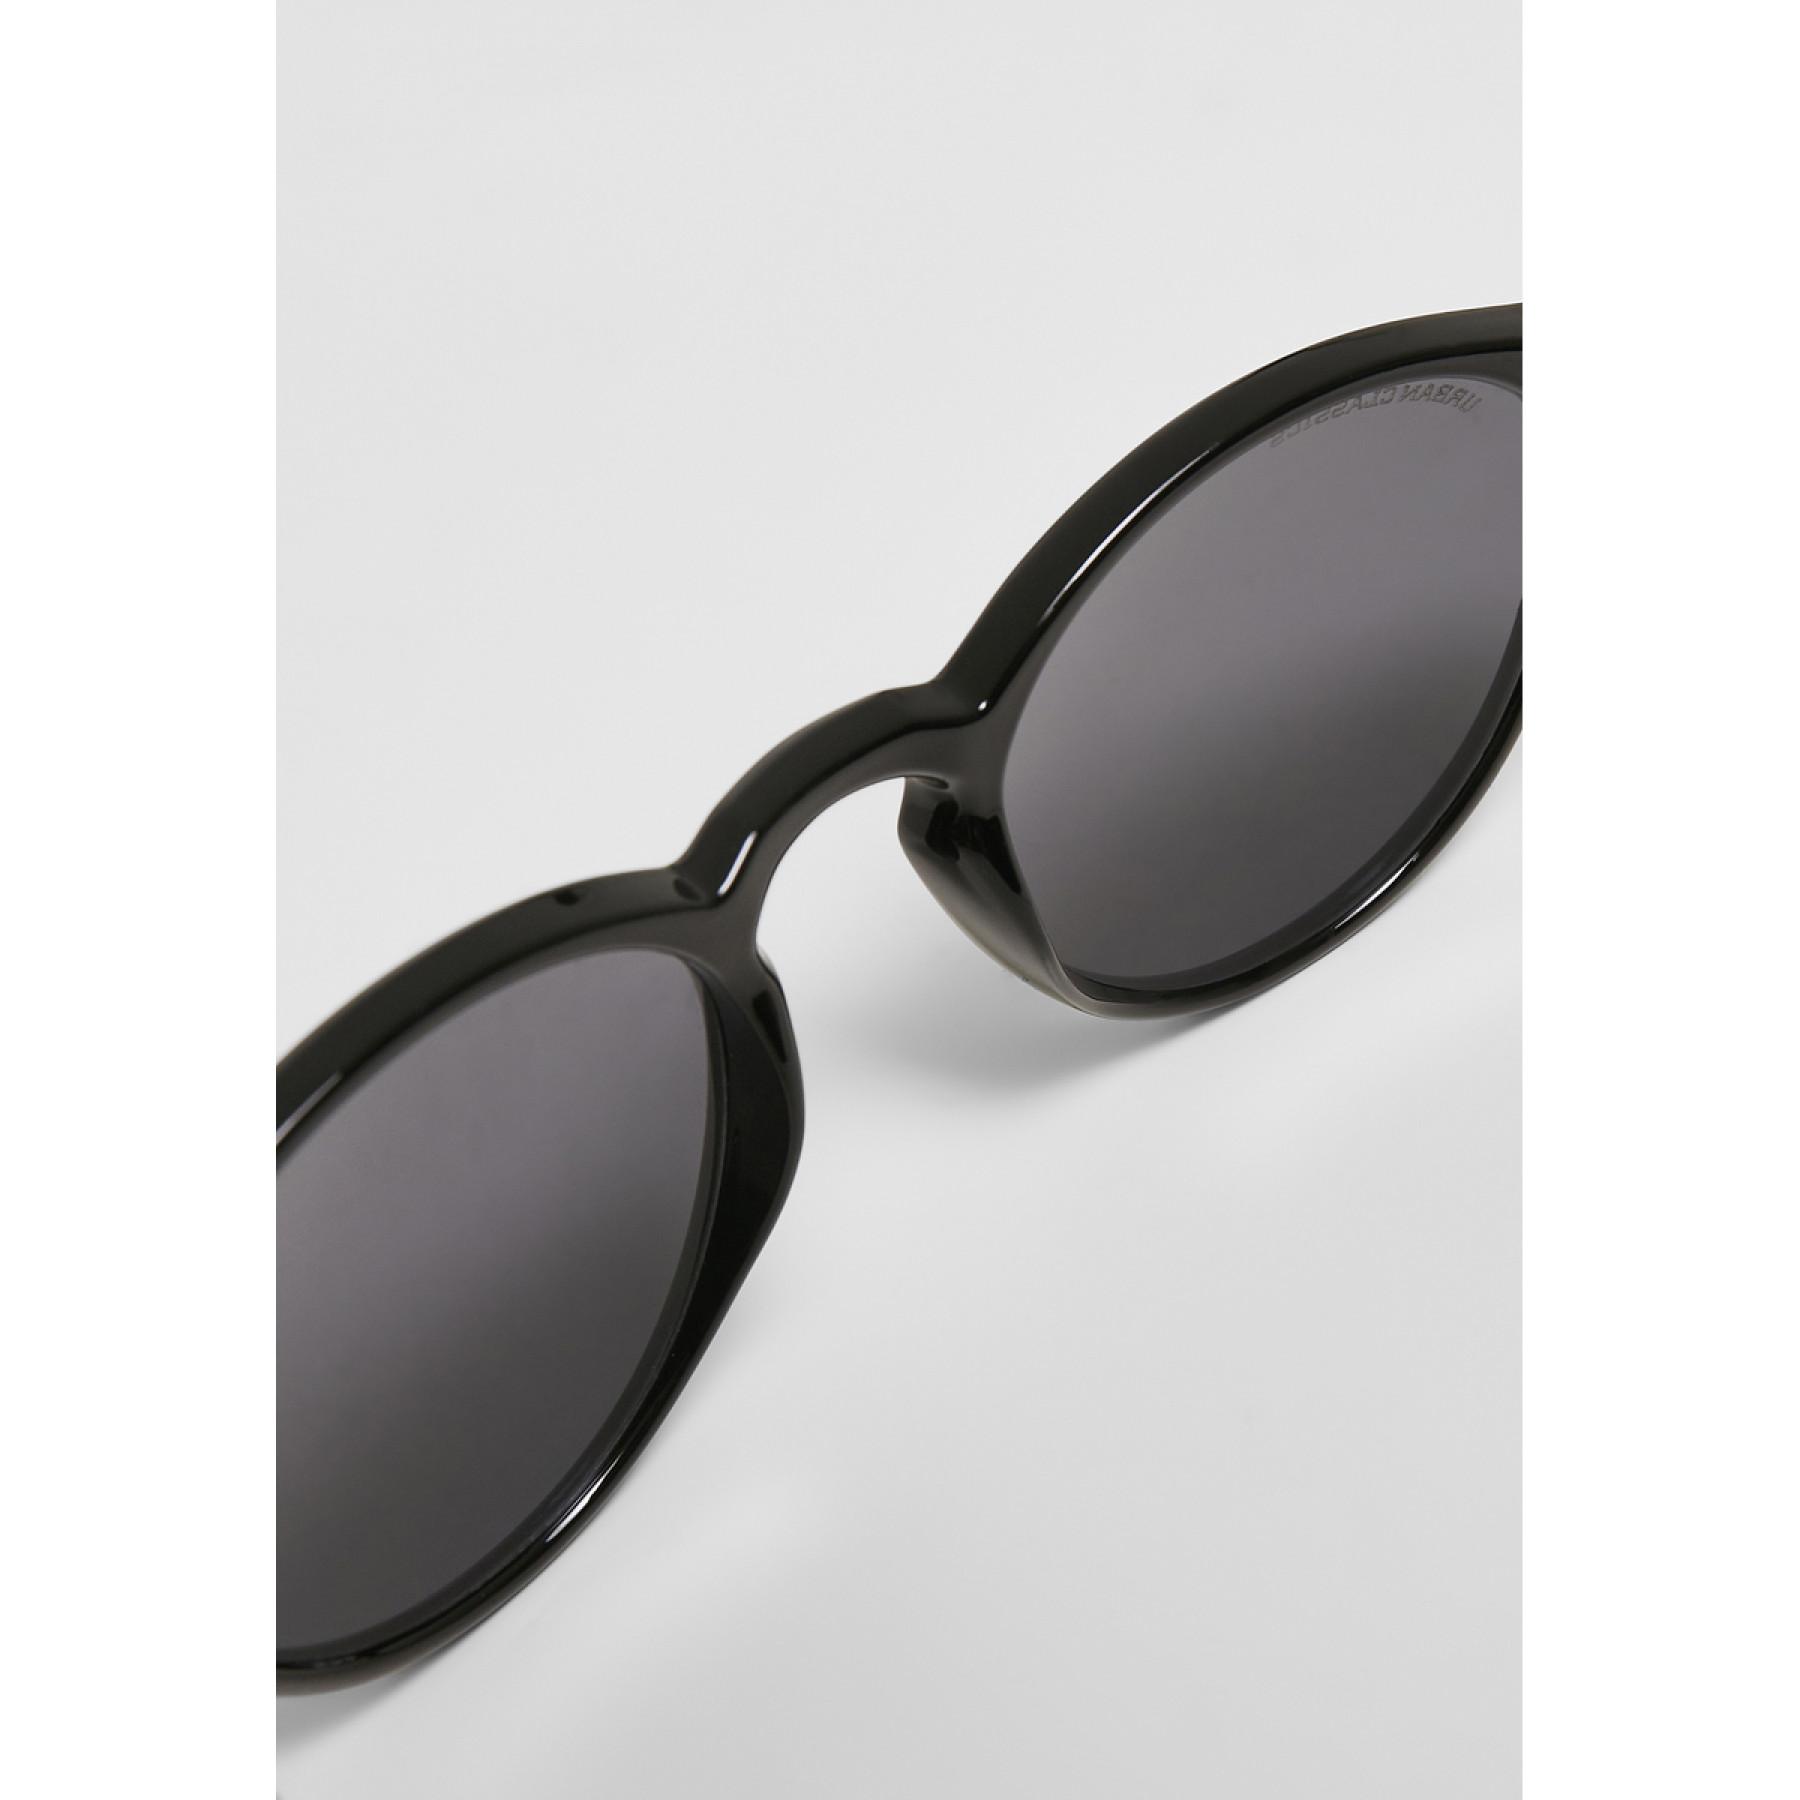 3 cypress - Classics - Equipment Running Urban - Pack Accessories sunglasses of